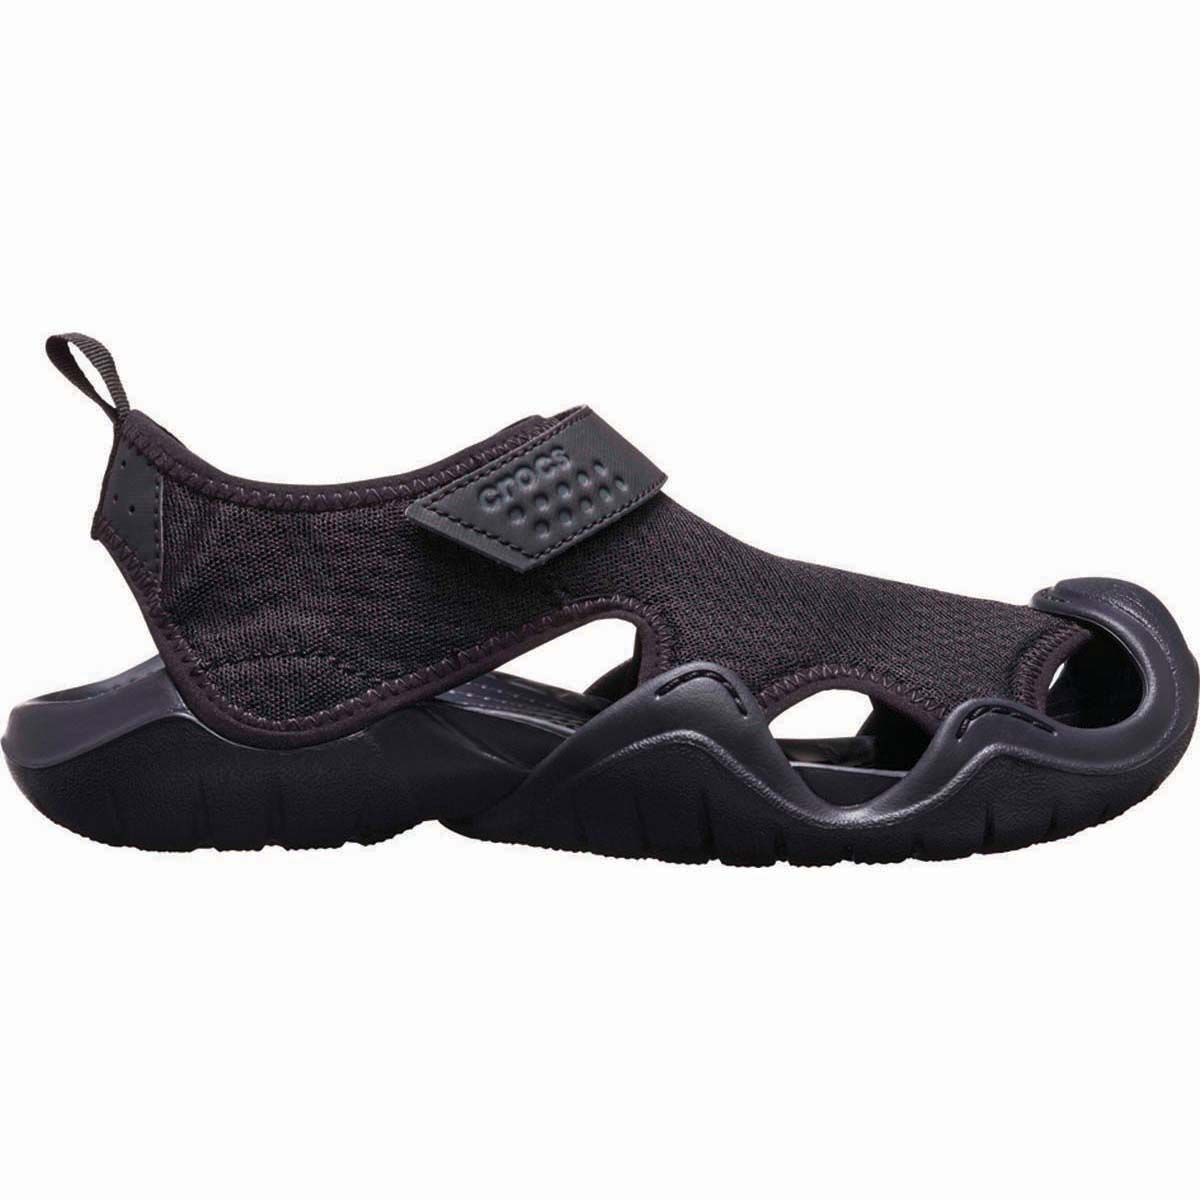 croc swiftwater sandals